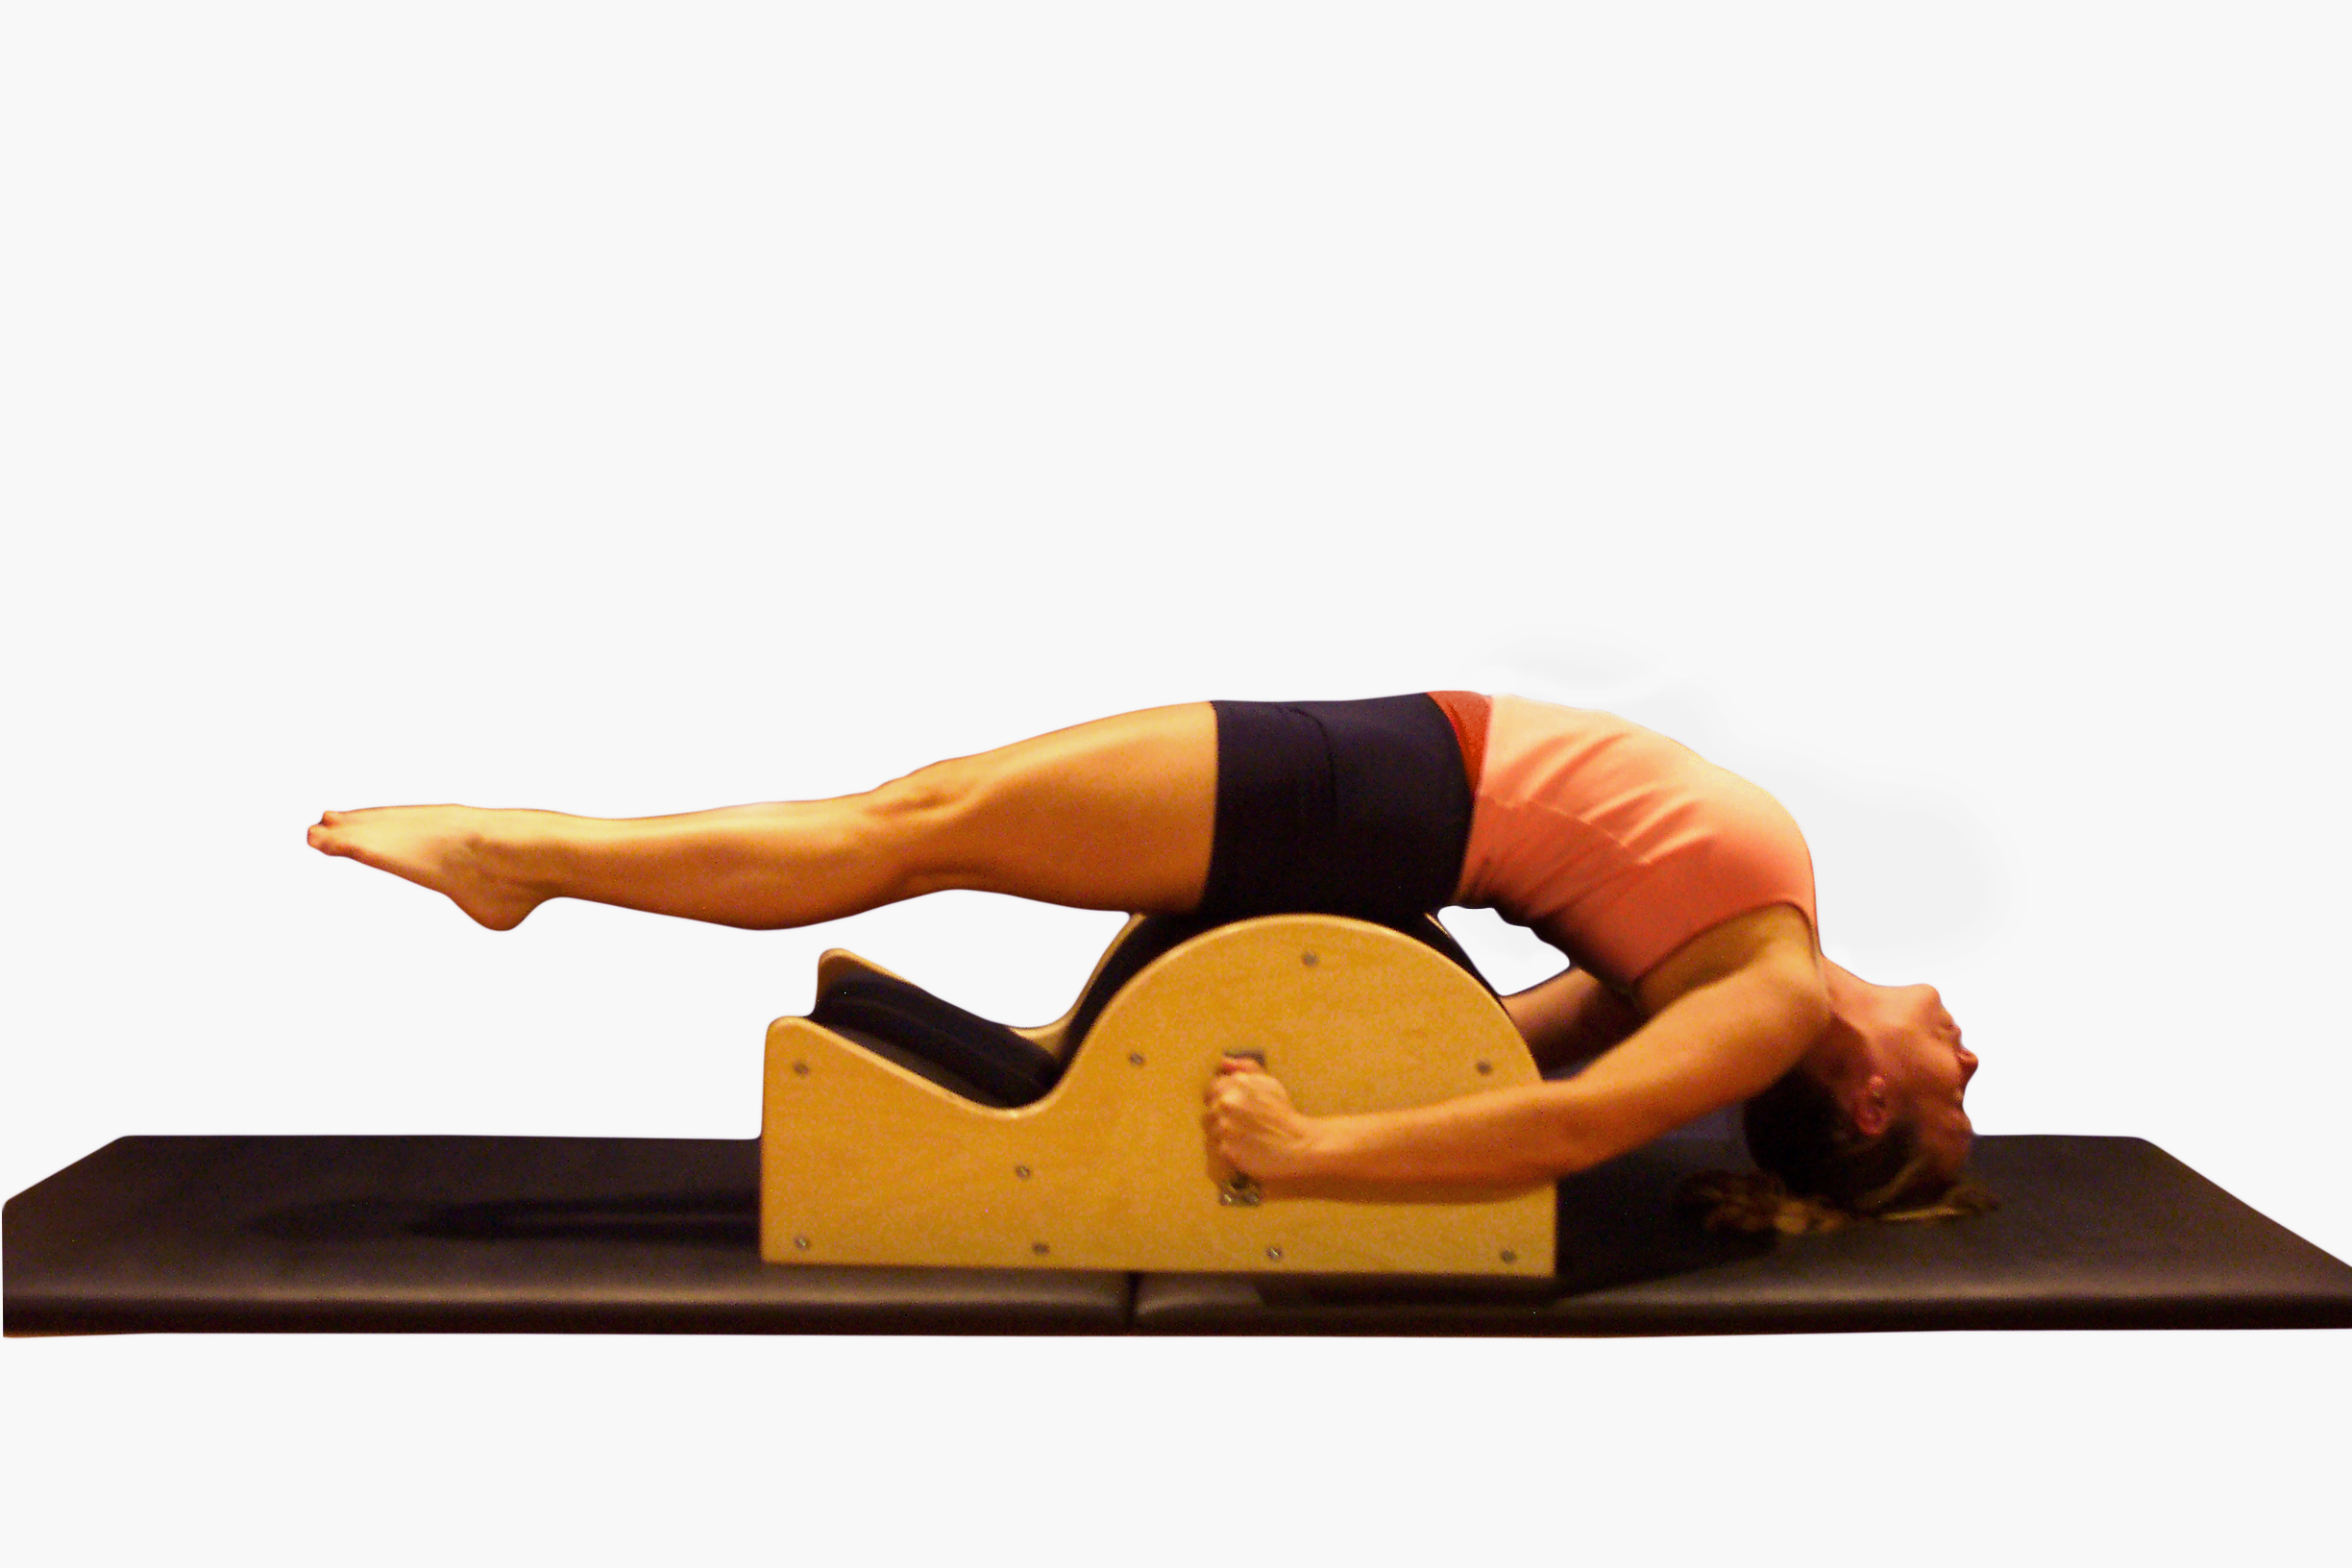 Spine Extension: “Secret” Training Tips